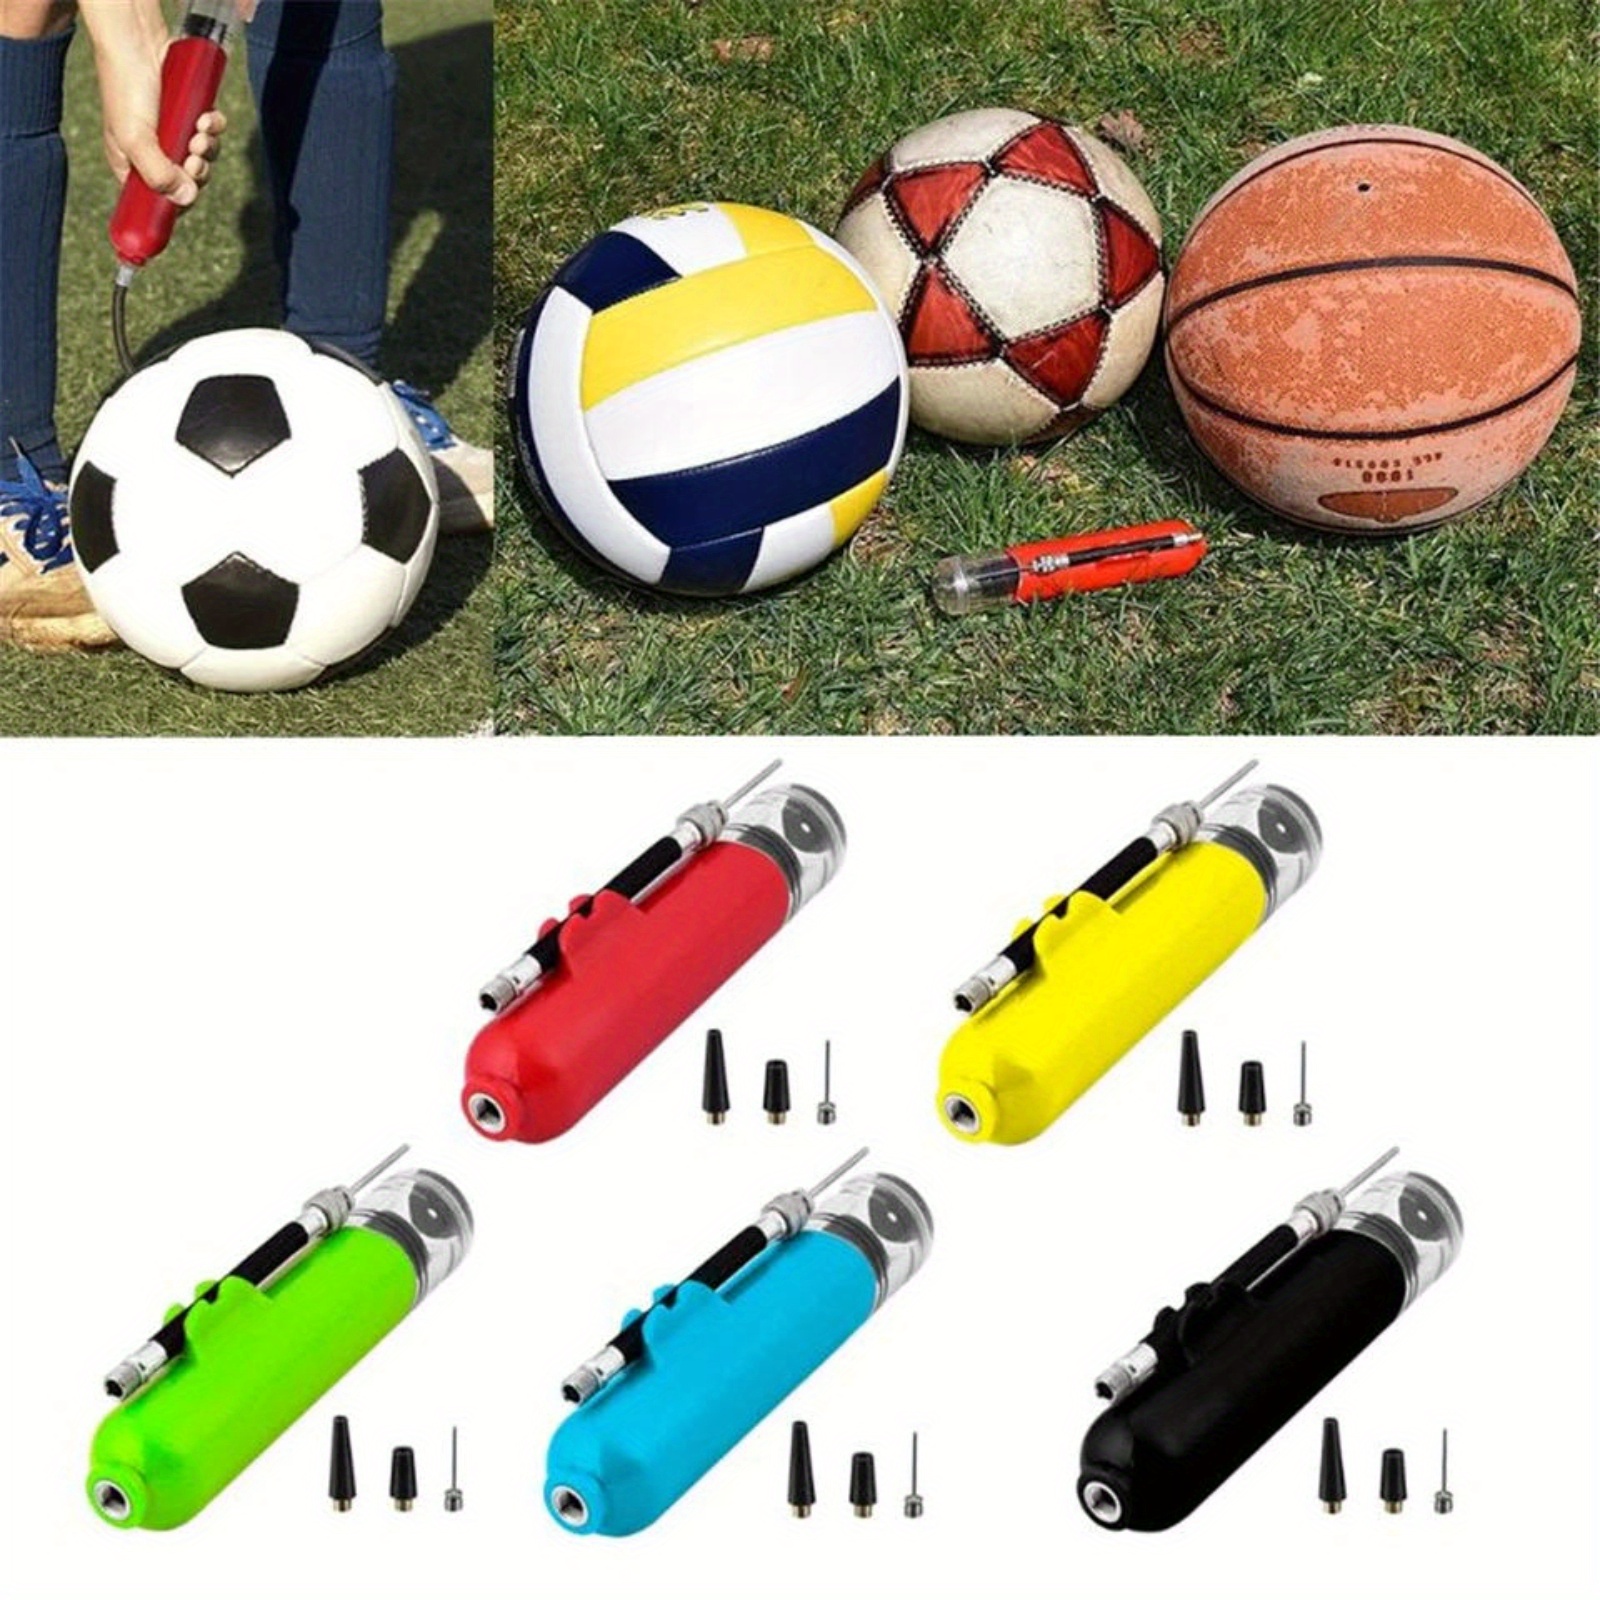 ONG NAMO Ball Pump with 10 Needles & 2 Nozzles for Sports Basketball Soccer  Ball Football, Hand Air Pump Kit for Inflating, Soccer & Basketball Pump